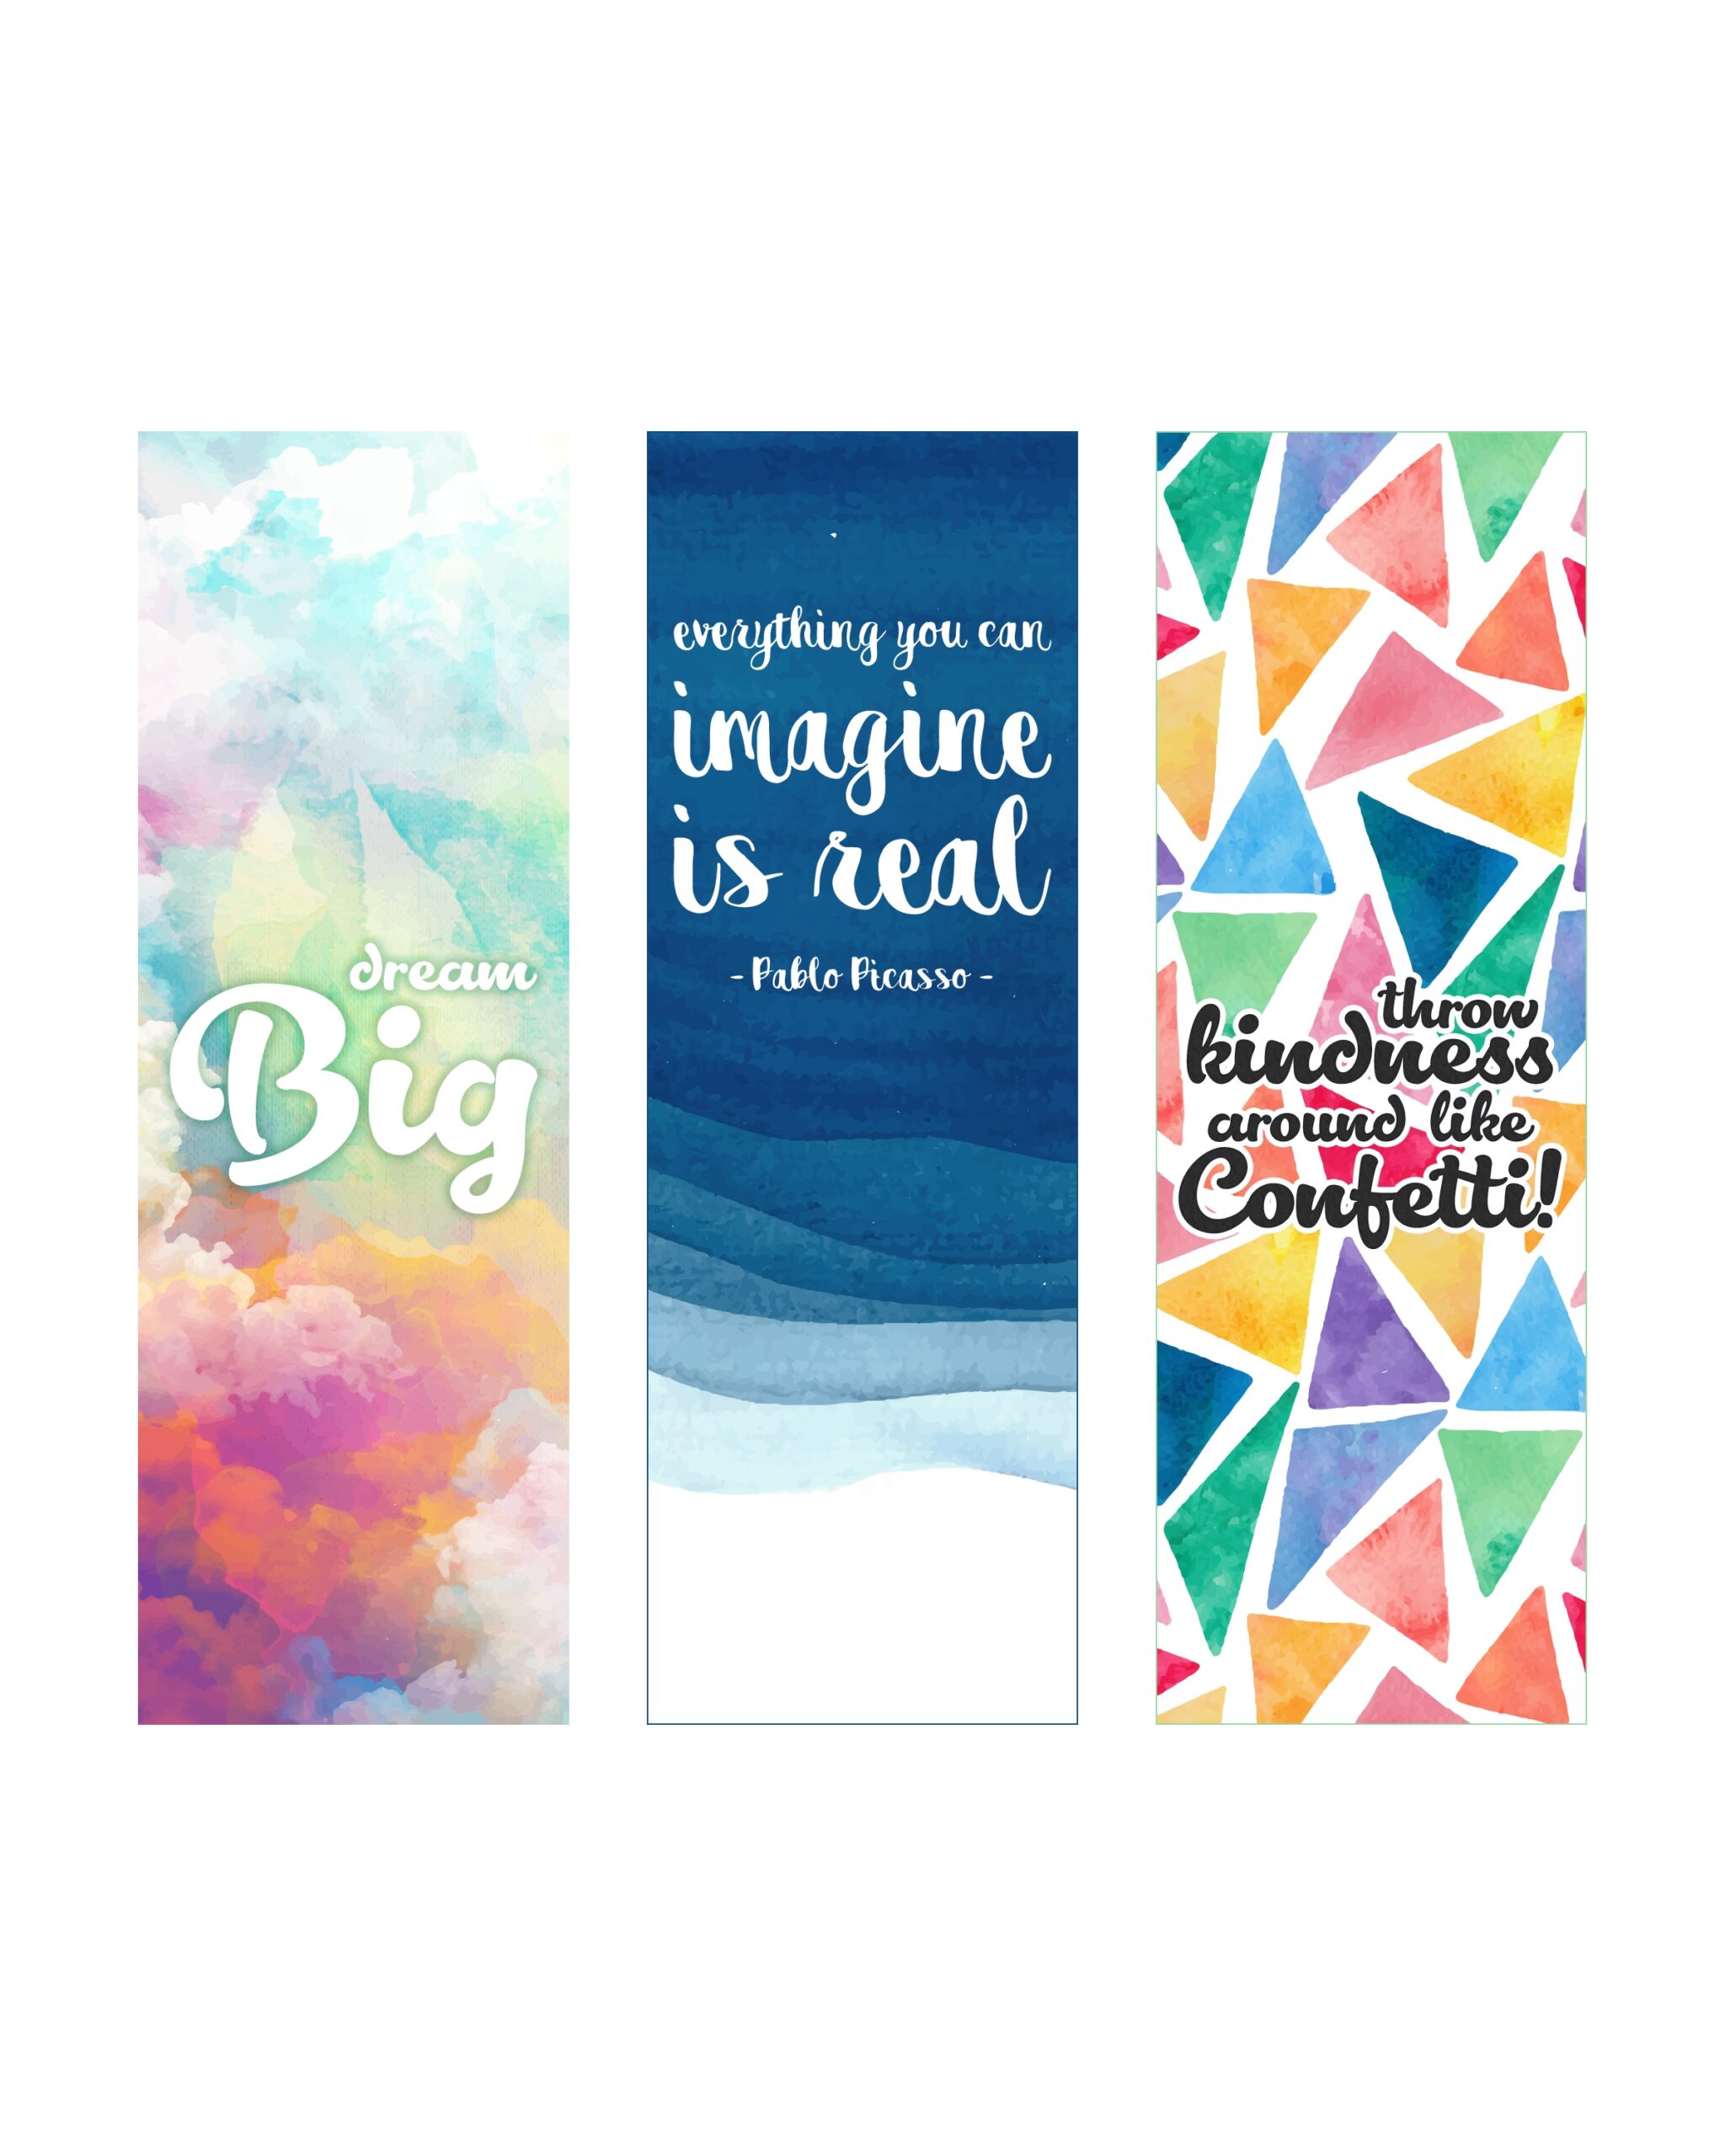 Free Printable Inspirational Bookmarks